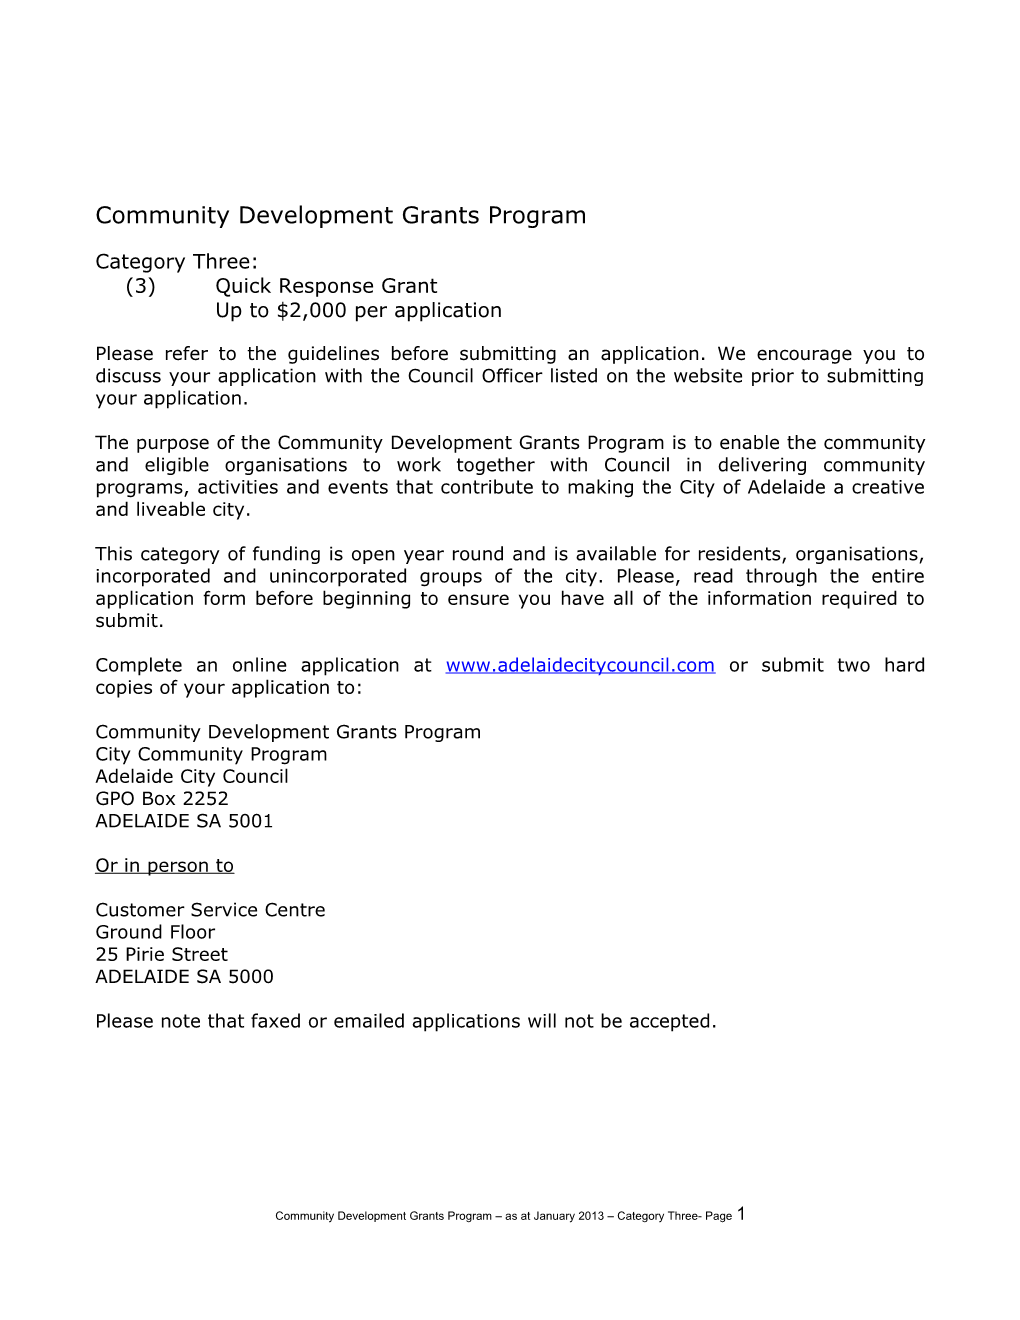 Community Development Grants Program As at January 2013 Category Three- Page 1